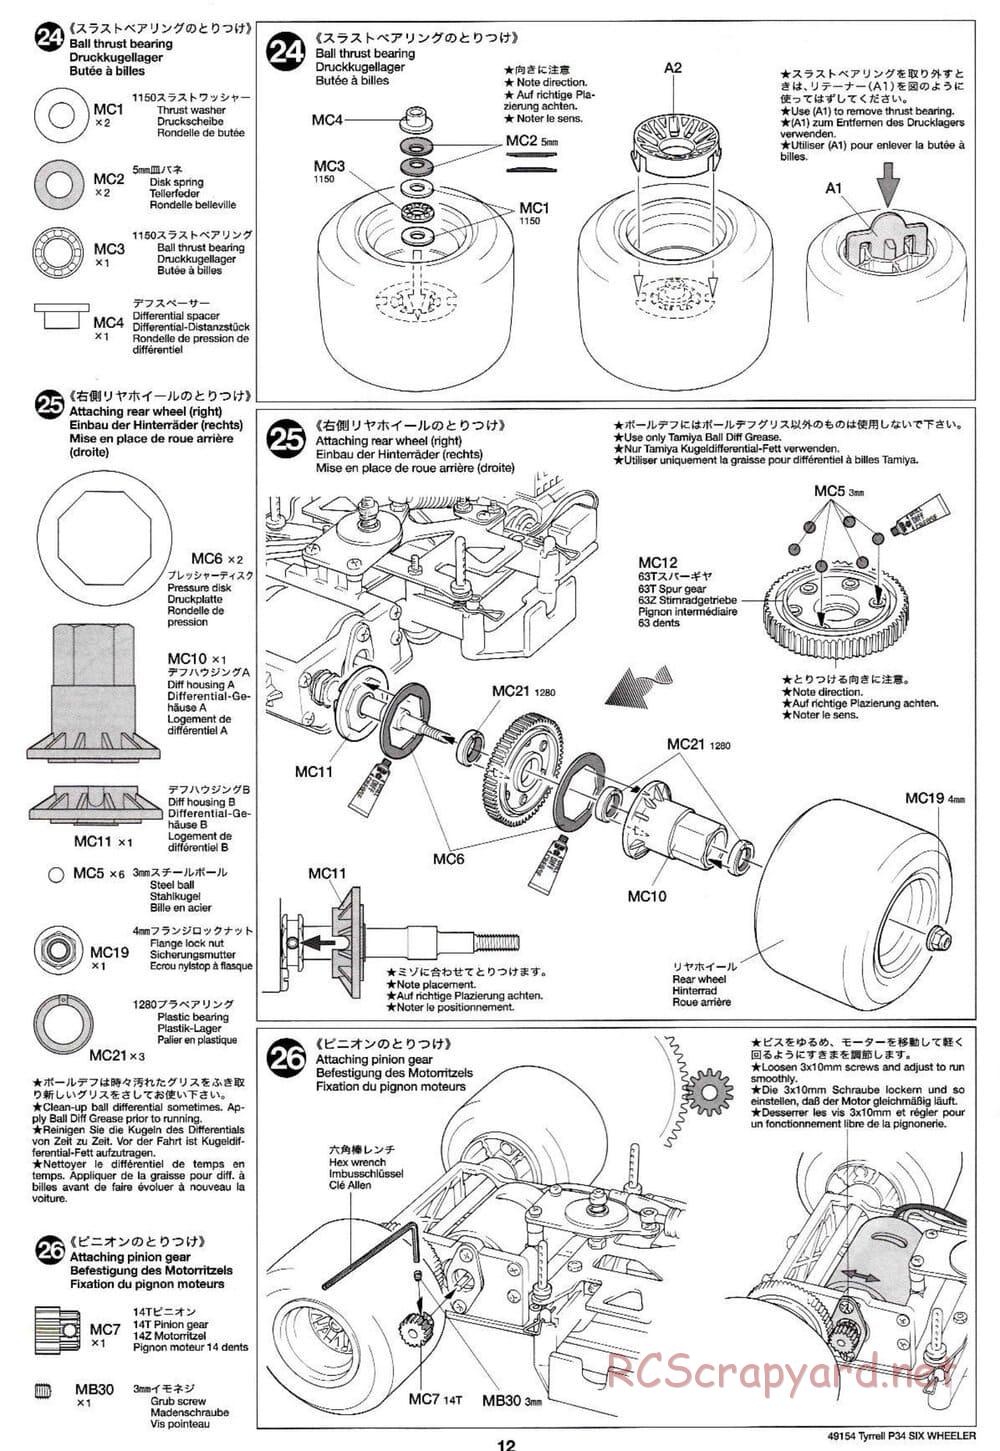 Tamiya - Tyrrell P34 Six Wheeler - F103-6W Chassis - Manual - Page 12